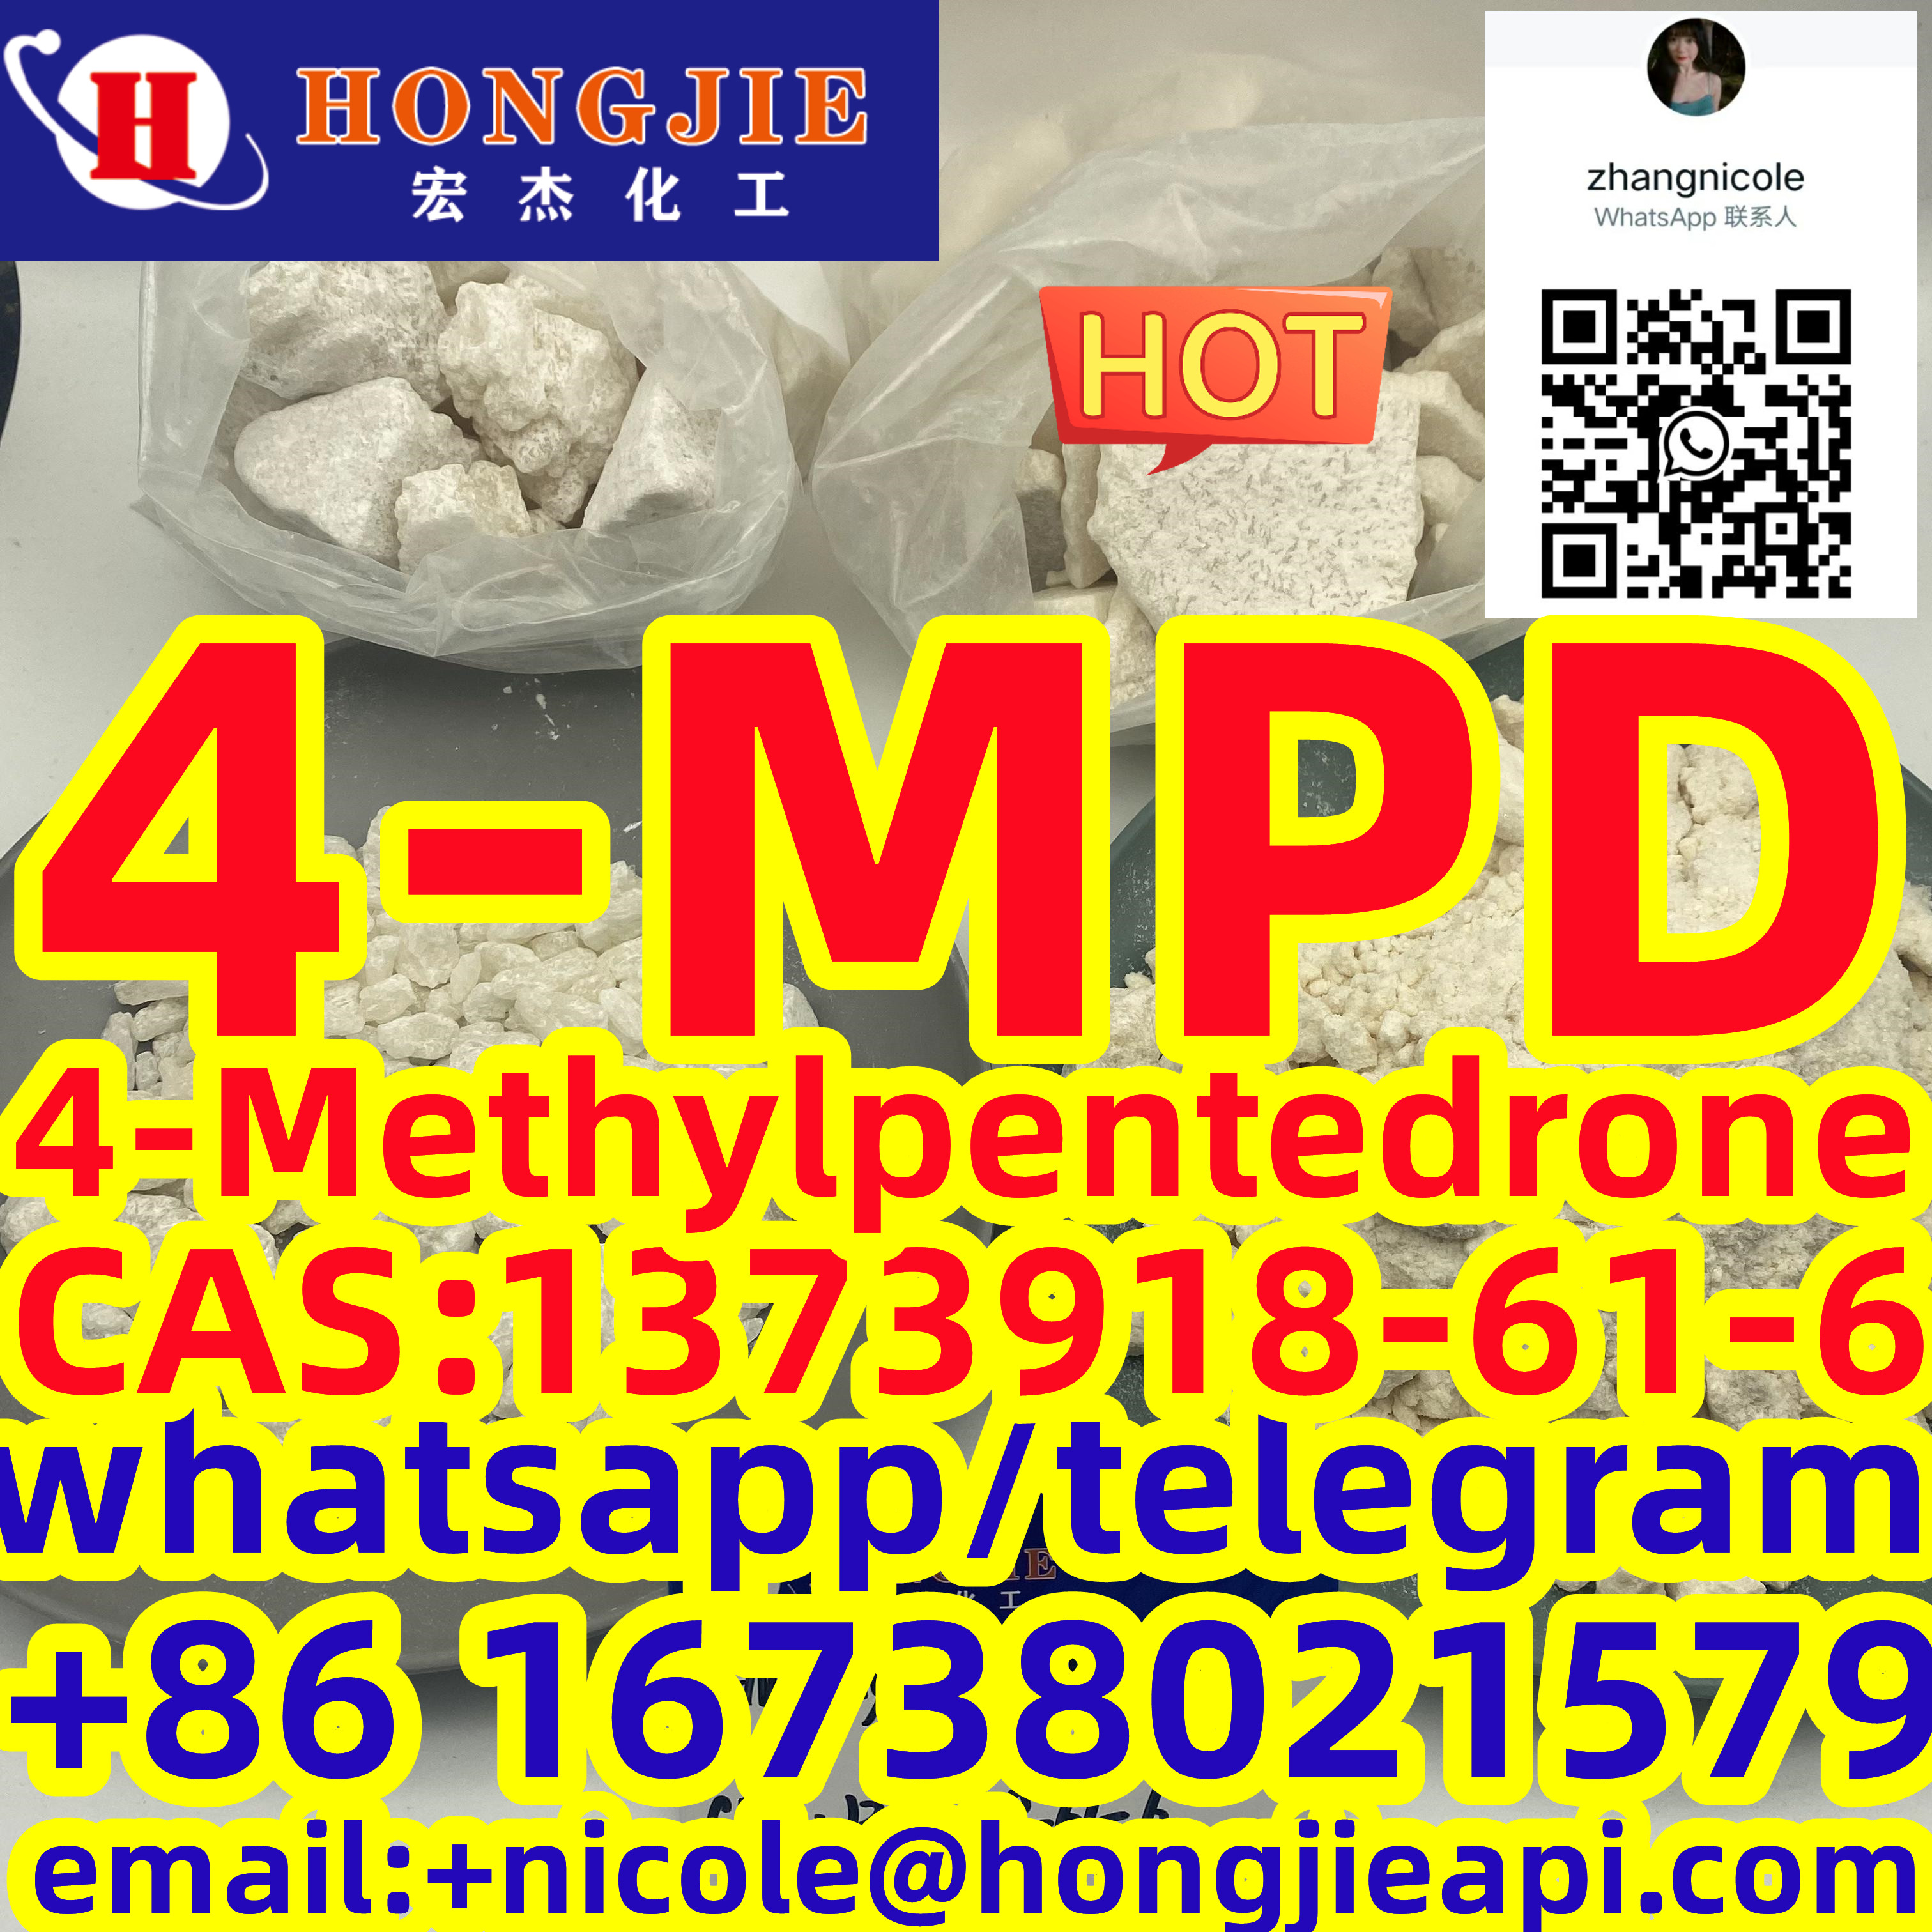 High quality 4-MPD 4-Methylpentedrone CAS:1373918-61-6